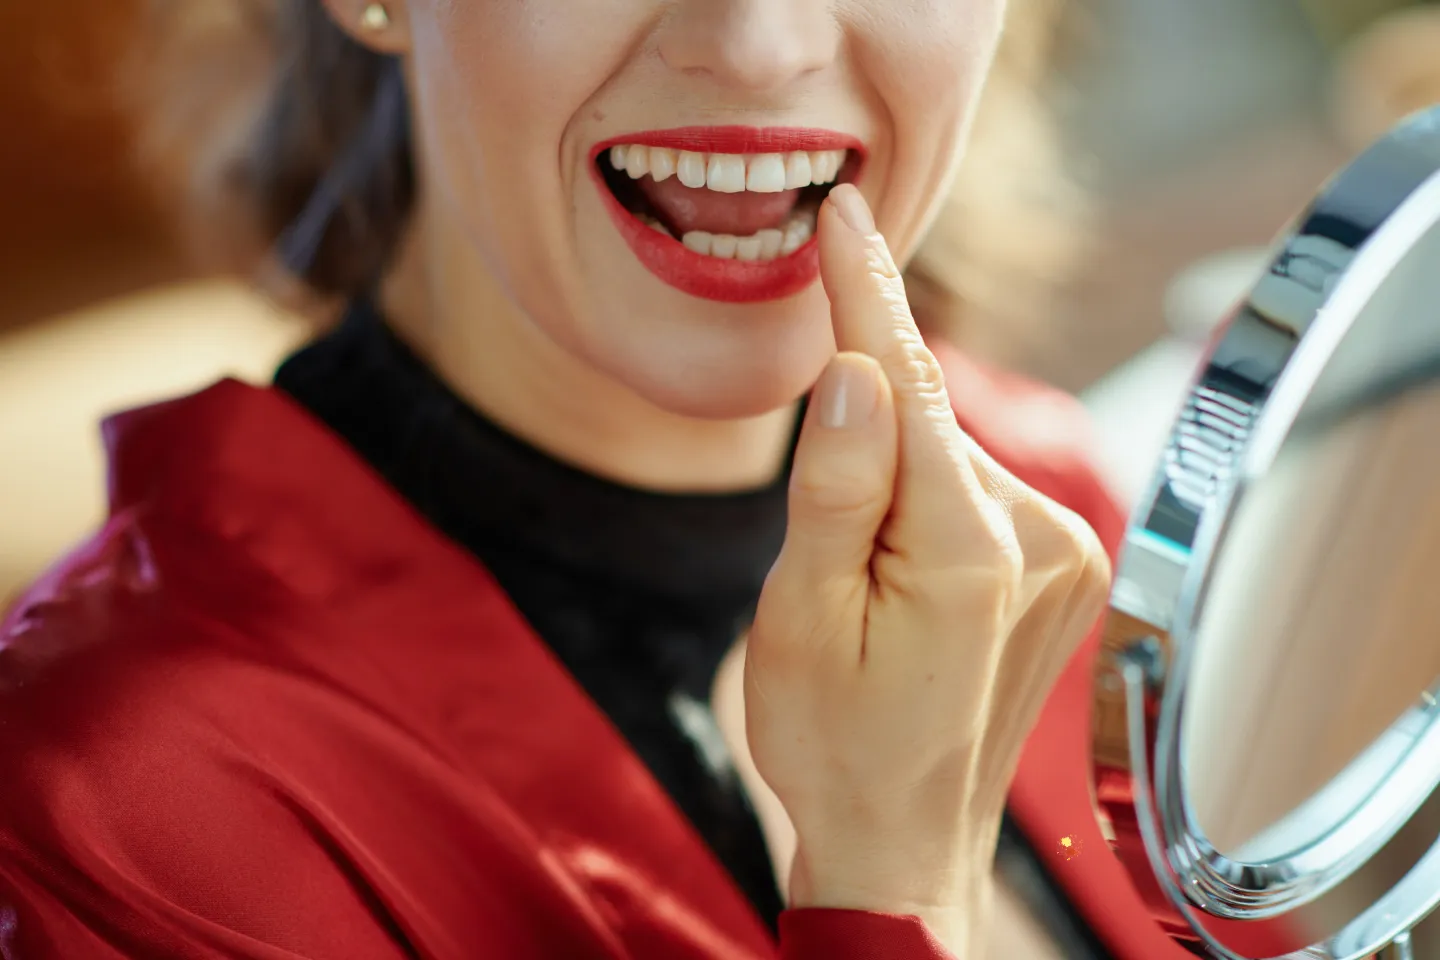 Ripon Dental Offers Dental Bonding, a Cosmetic Procedure